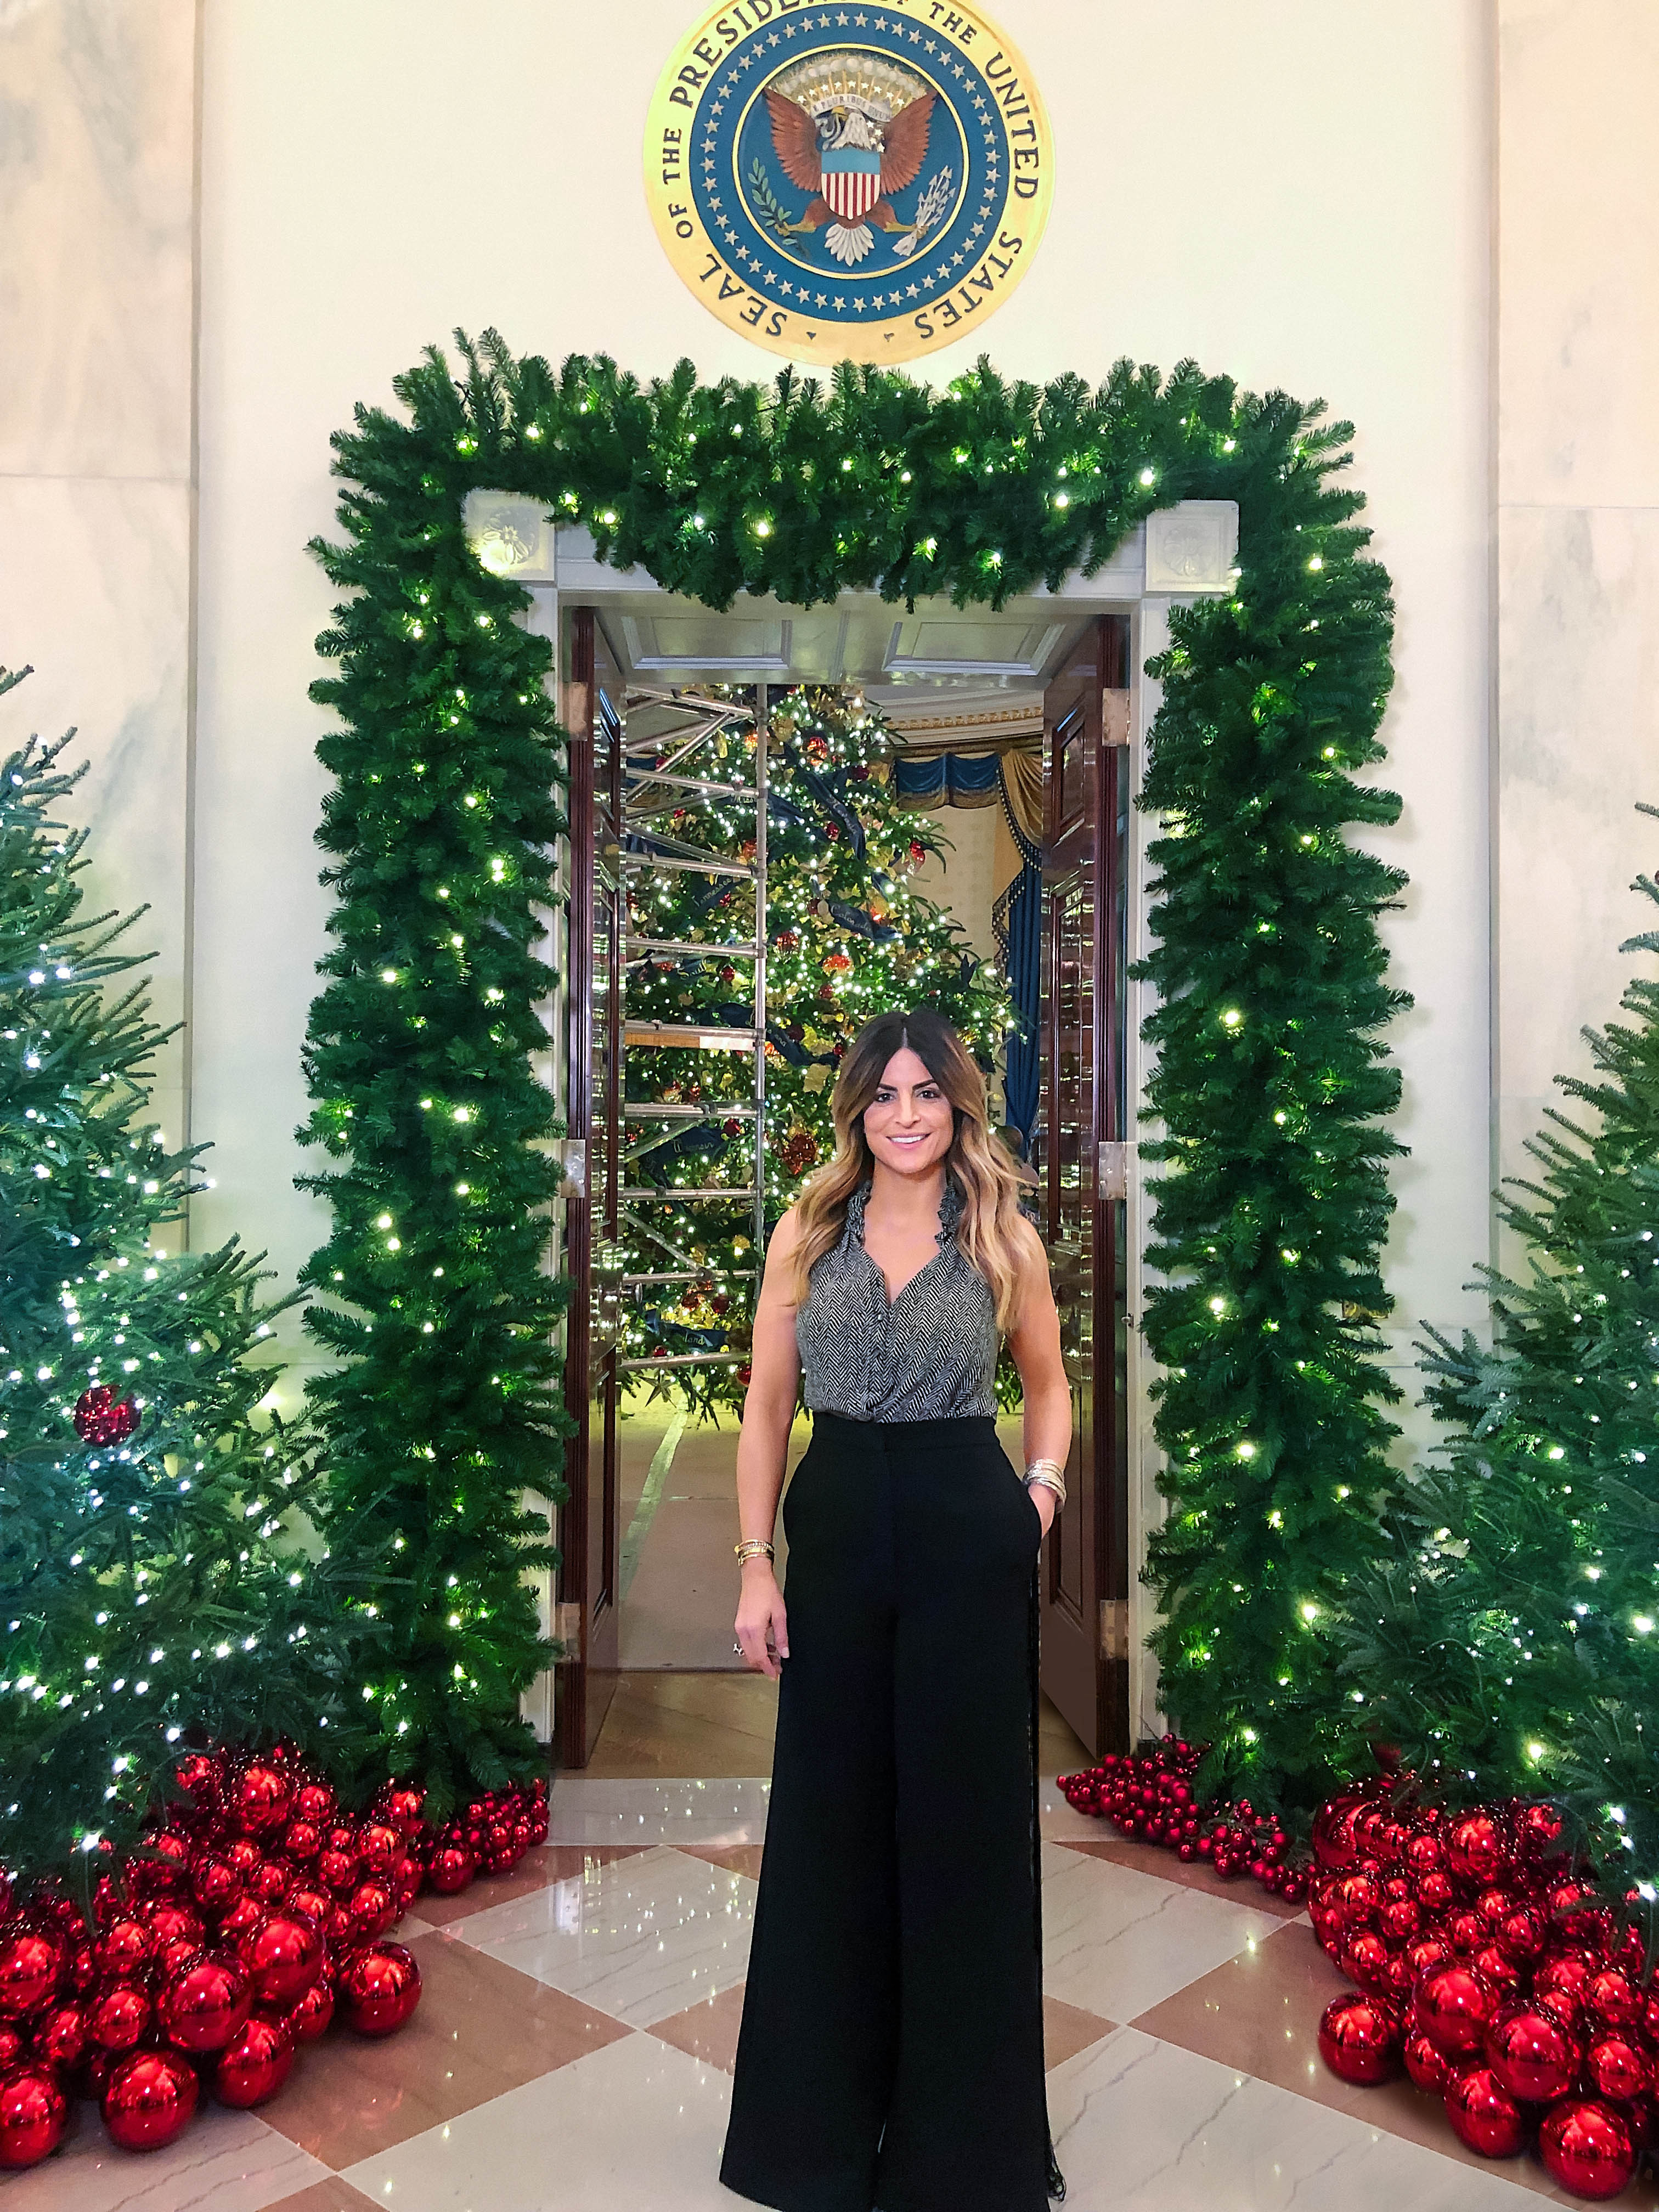 Hgtv To Premiere White House Christmas 2018 On Sunday Dec 9